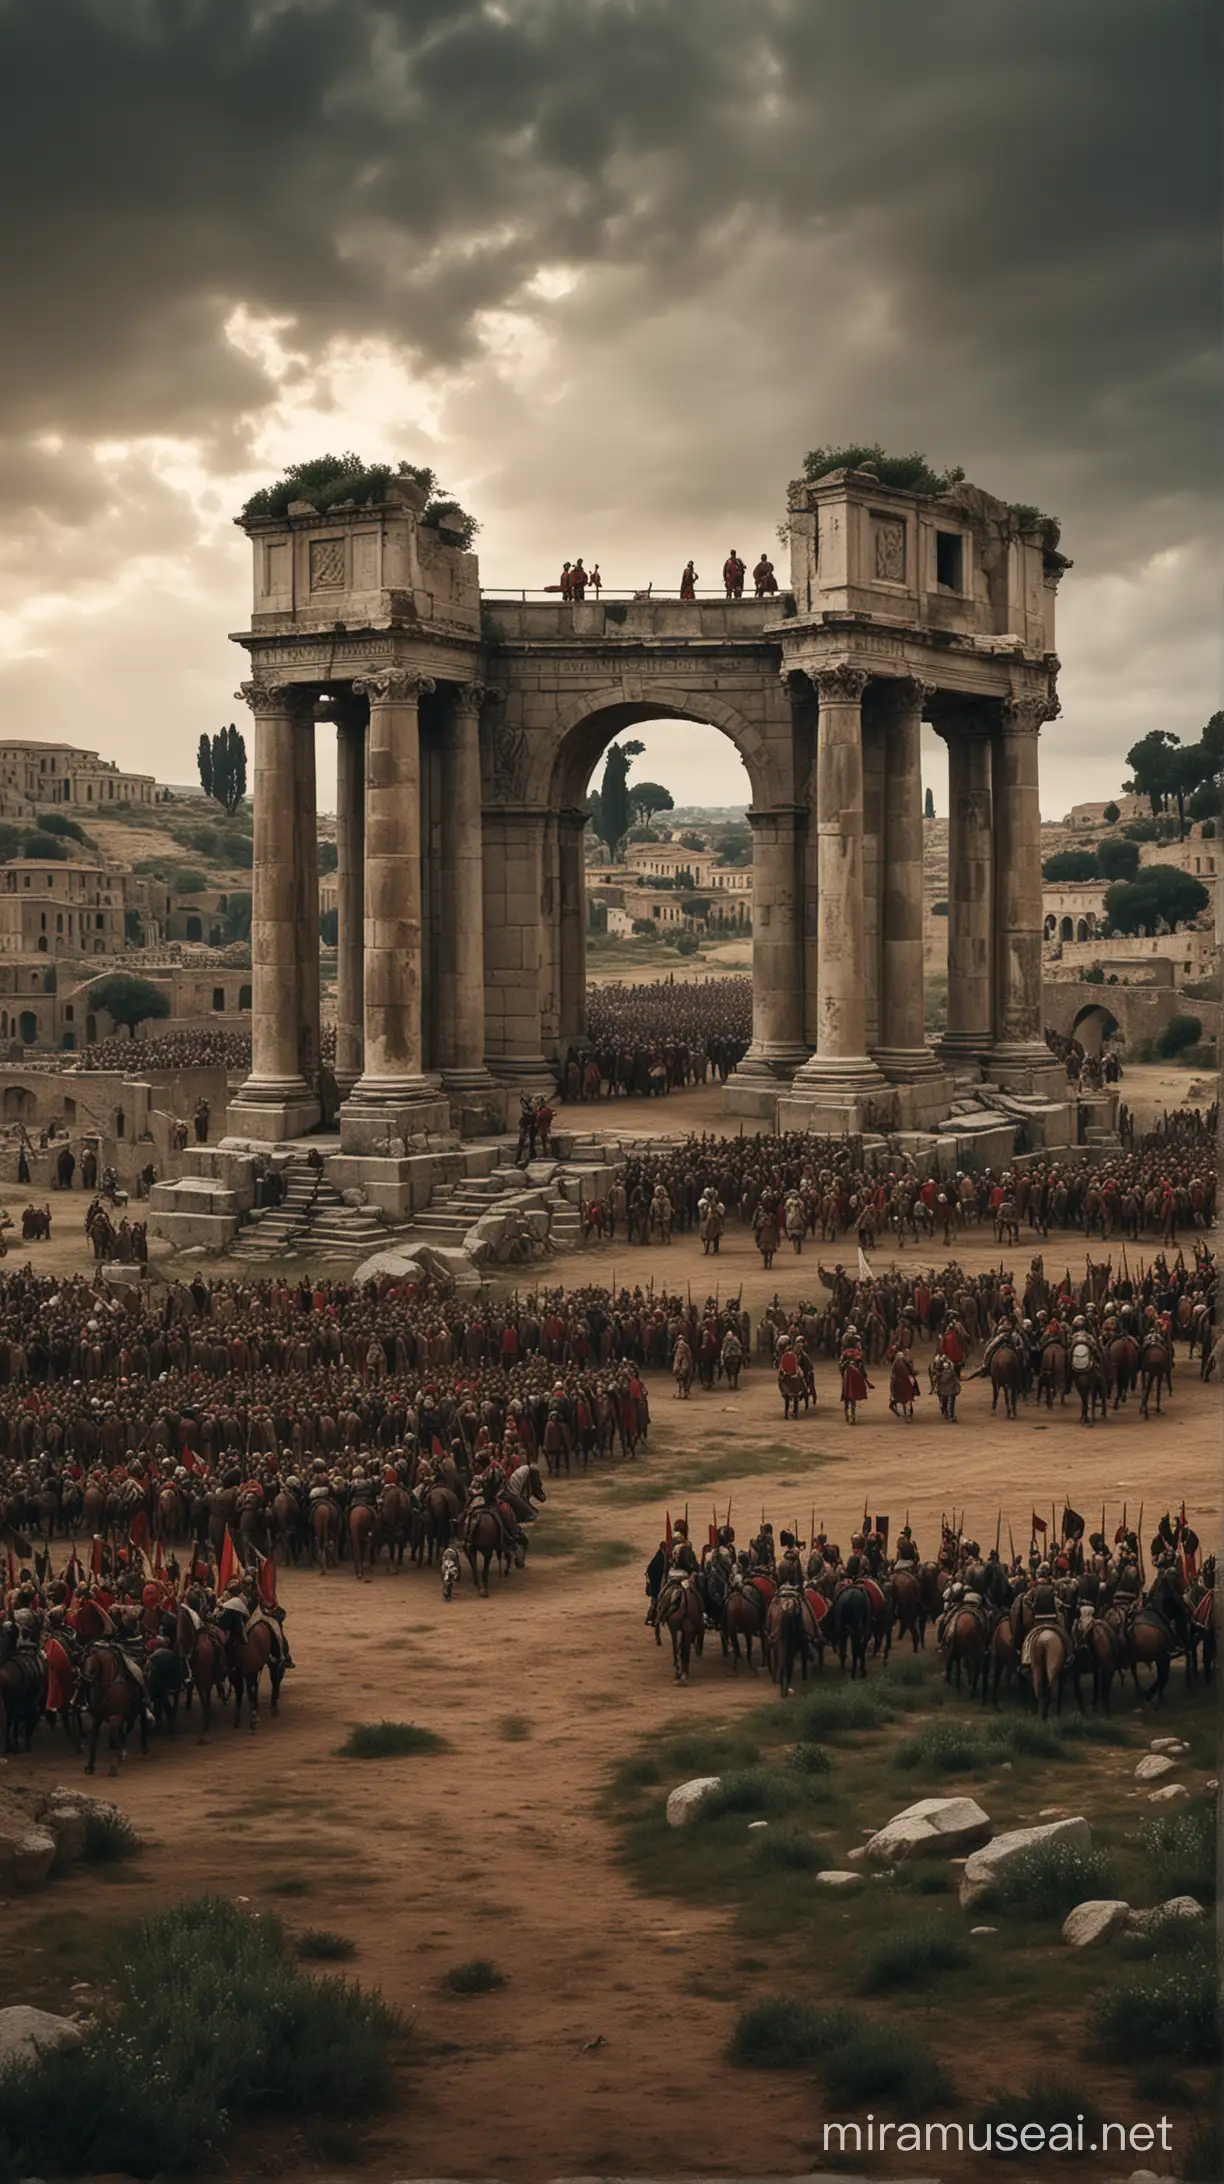 Octavia and Antonys Escalating Conflict Scenes of Battle Amidst Roman Architecture